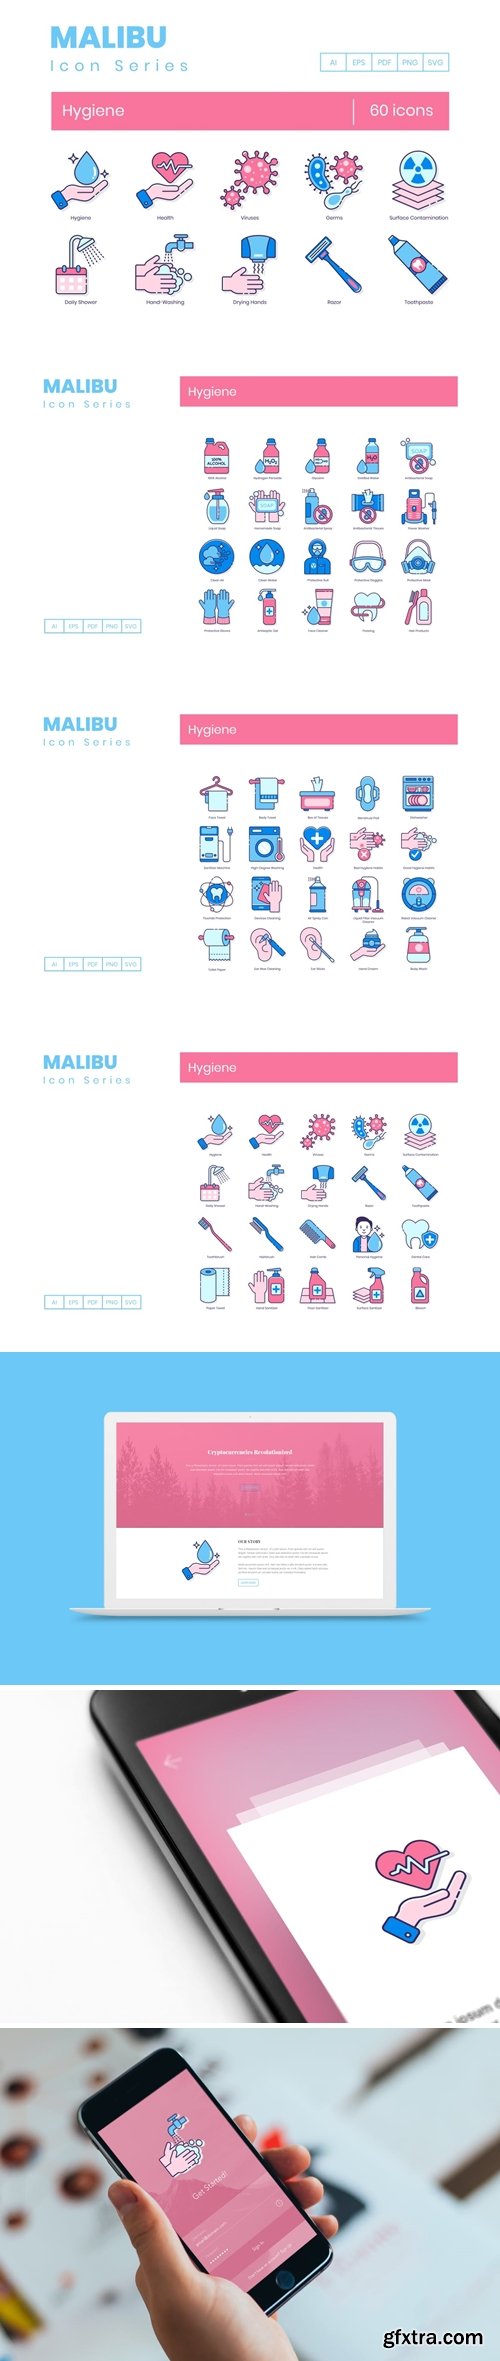 60 Hygiene Icons | Malibu Series